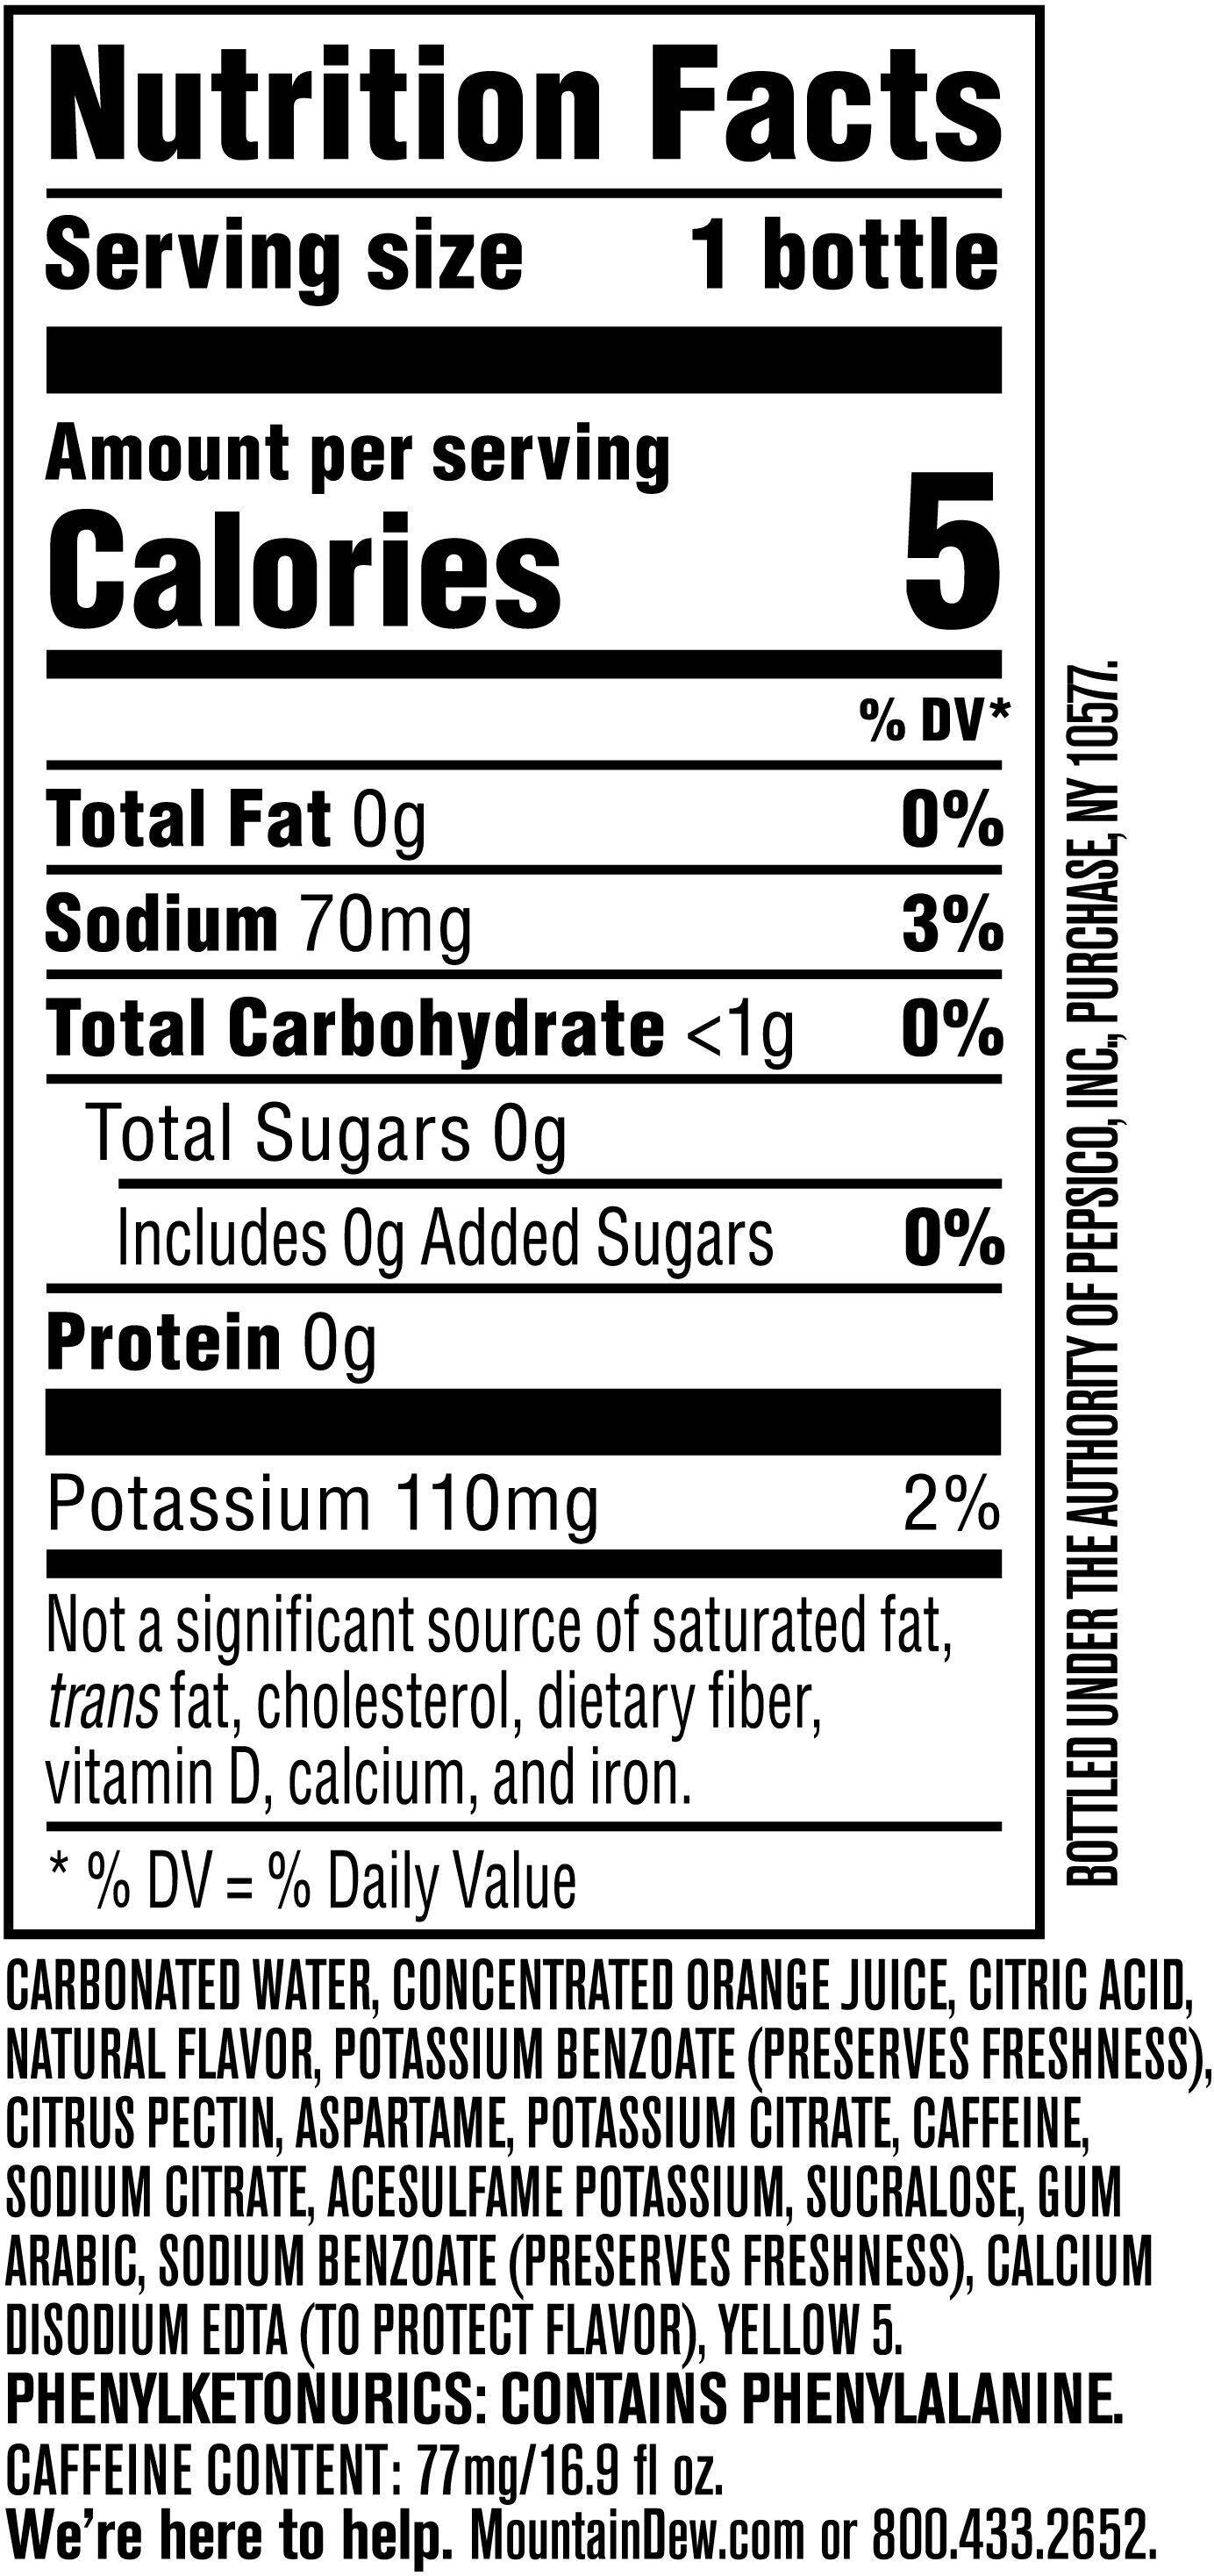 Image describing nutrition information for product Diet Mtn Dew